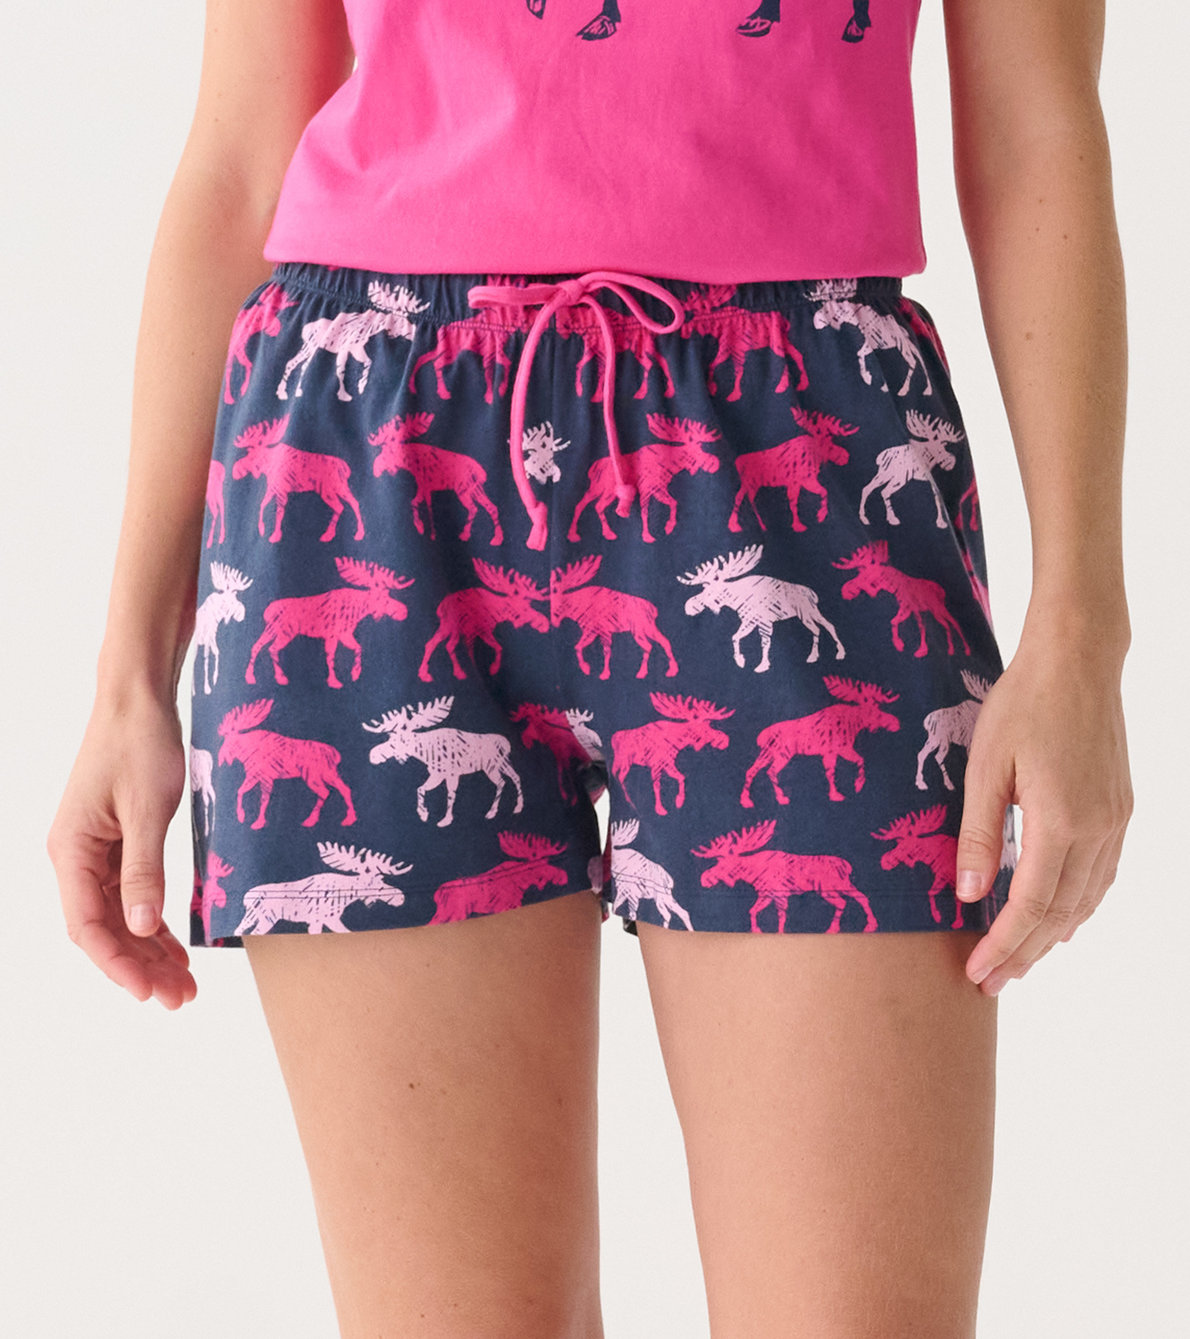 View larger image of Raspberry Moose Women's Sleep Shorts